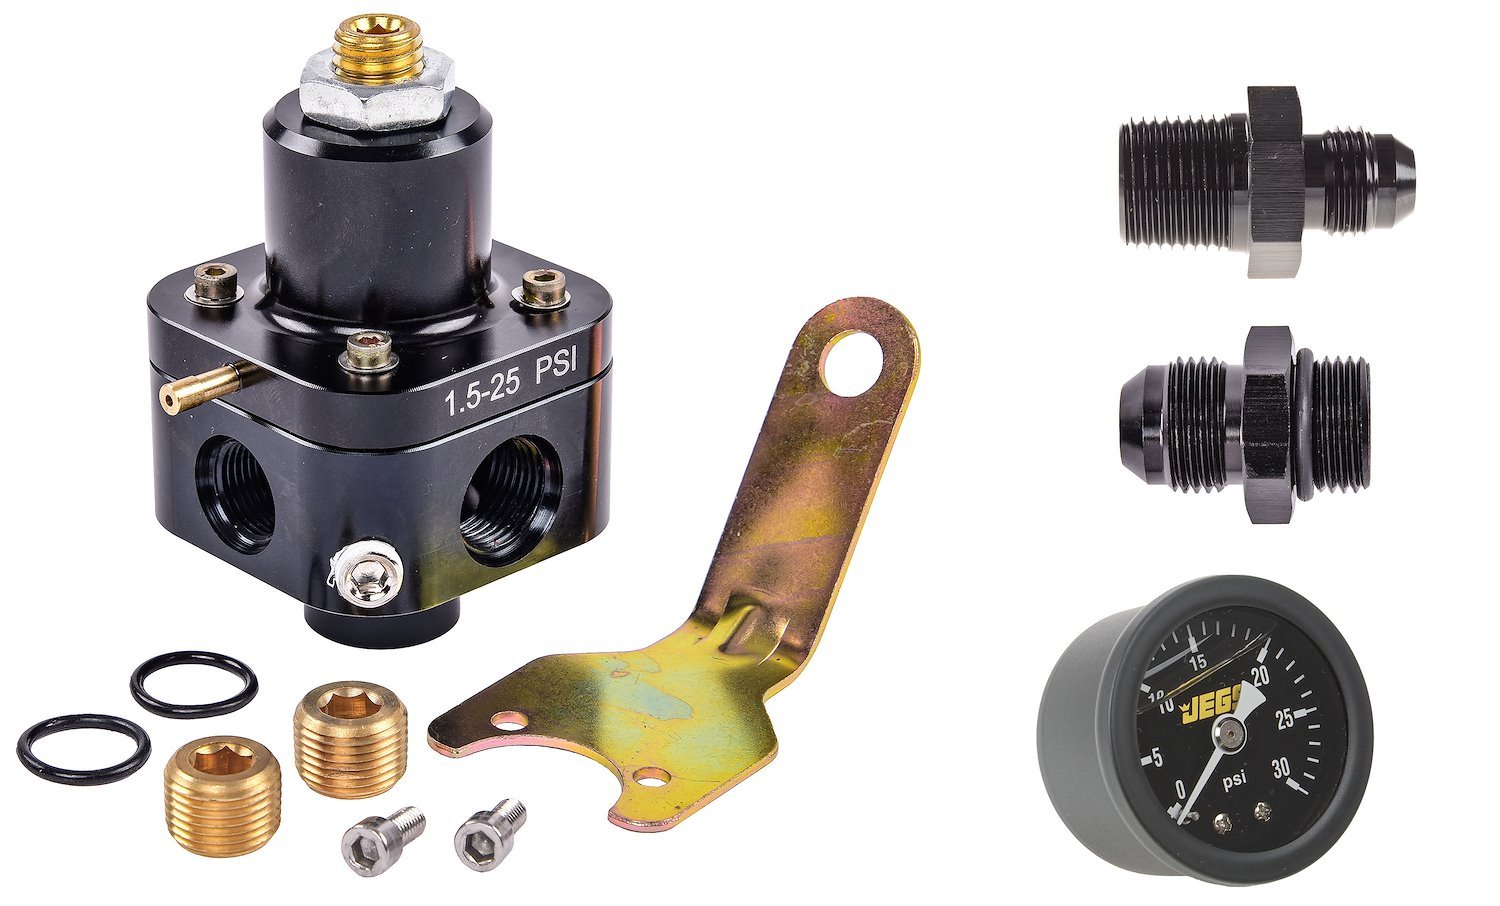 Fuel Pressure Regulator Kit for Carbureted Engines [1.5-25 PSI Outlet Pressure, Black Anodized]